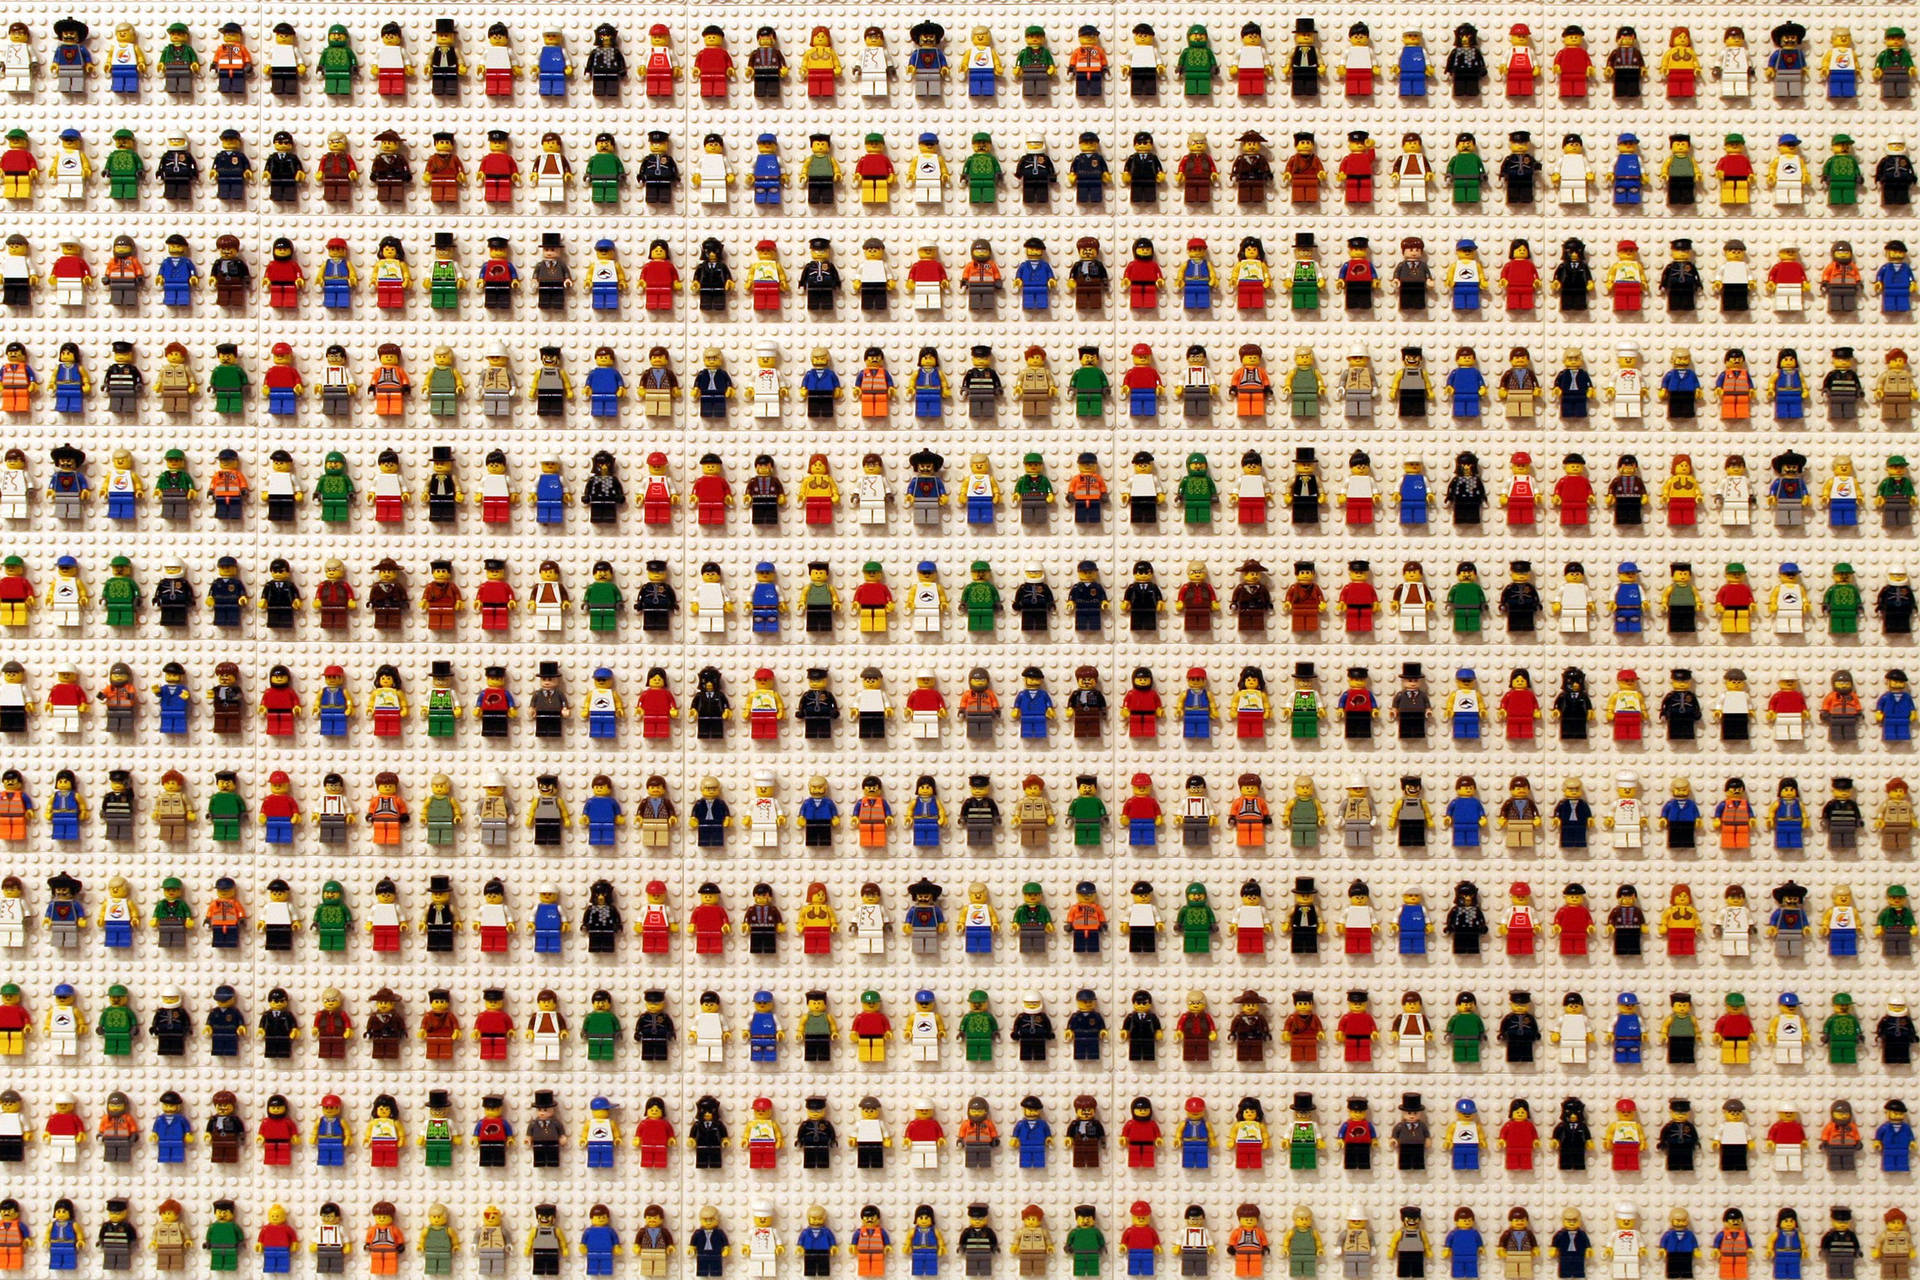 Lego Mini-figures Collection Wallpaper